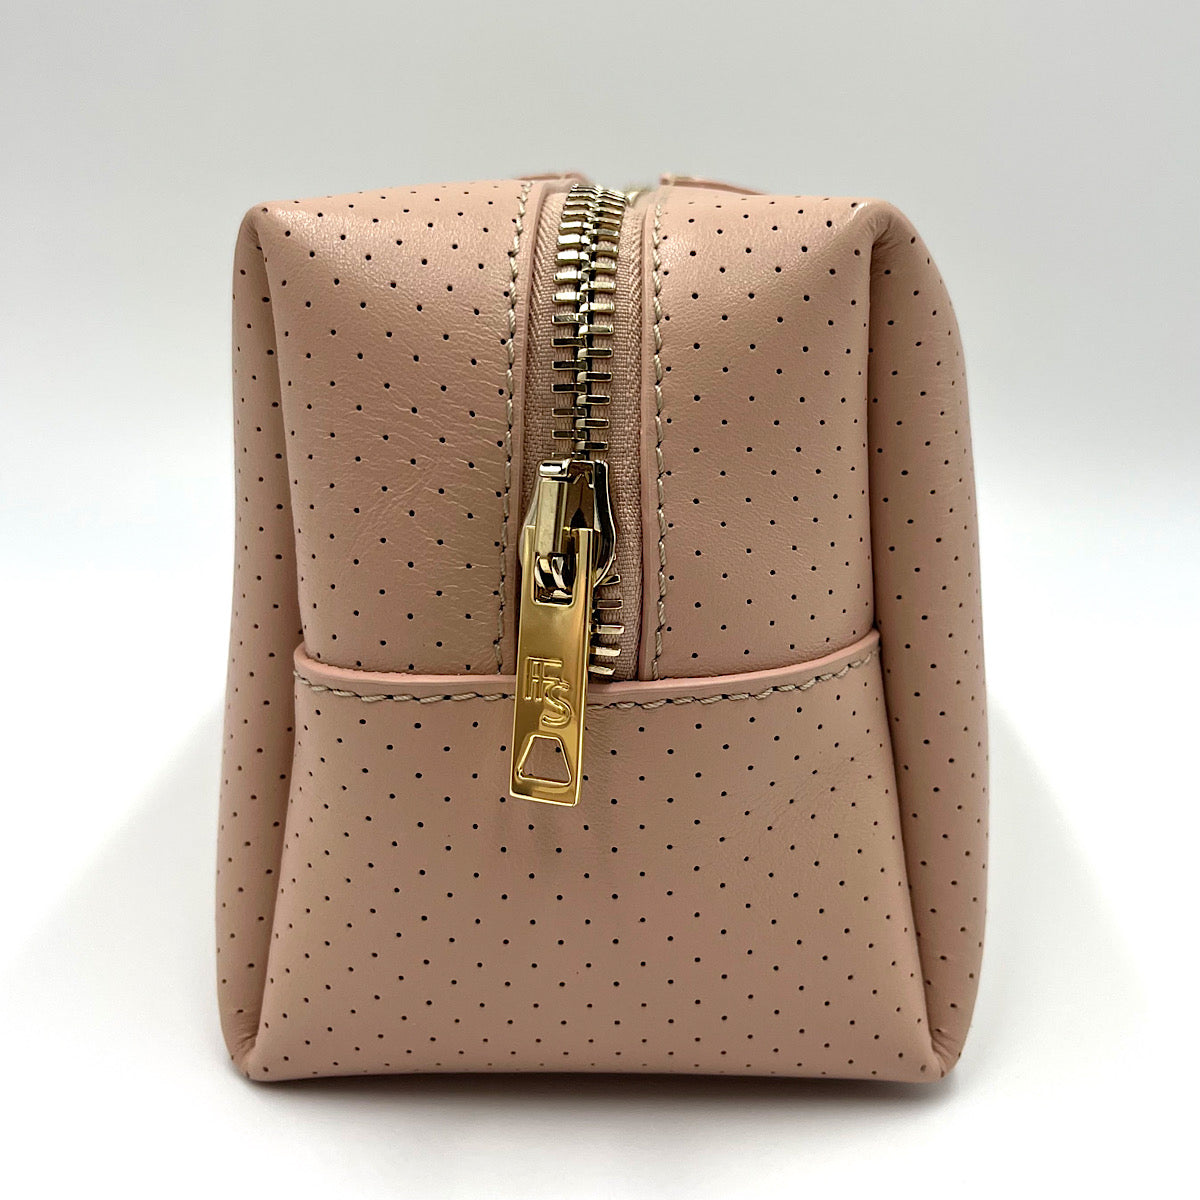 24/7 Bag - Blush Leather/Gold Zipper